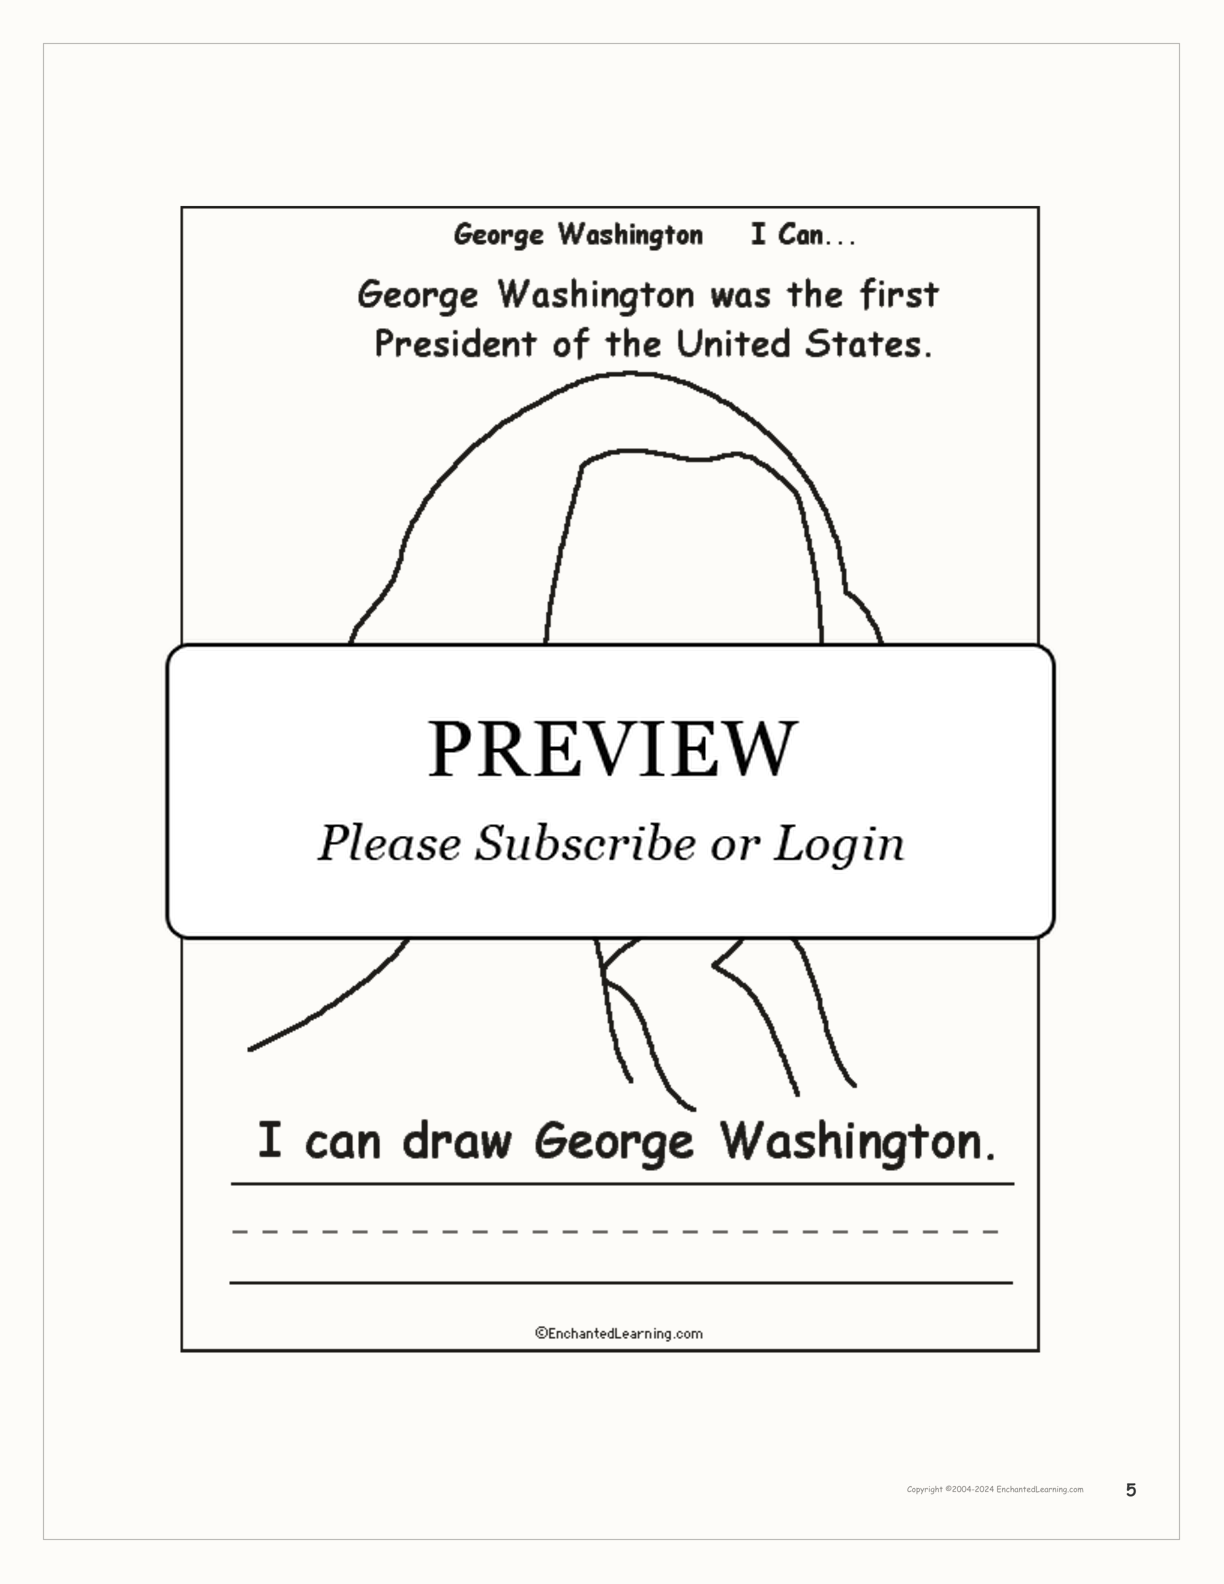 George Washington, I Can... interactive worksheet page 5